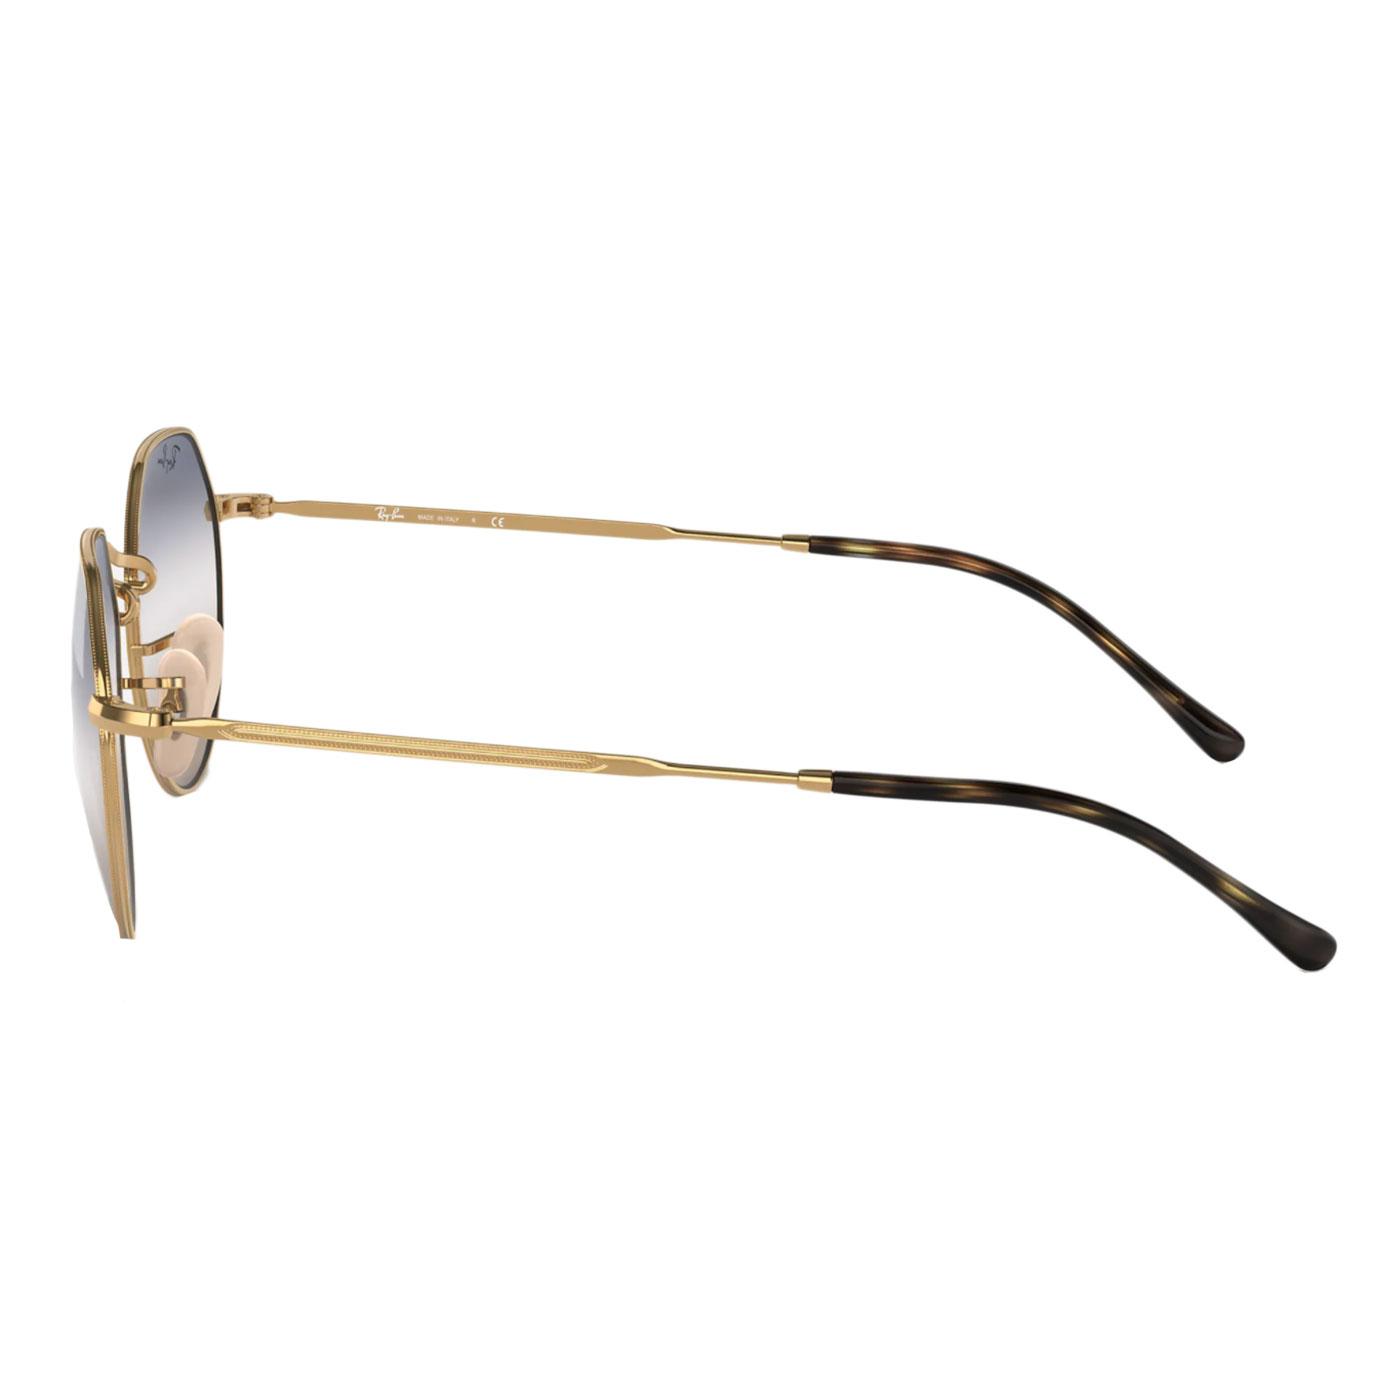 RAY-BAN Jack Retro 60s/70s Hexagonal Sunglasses in Arista Gold